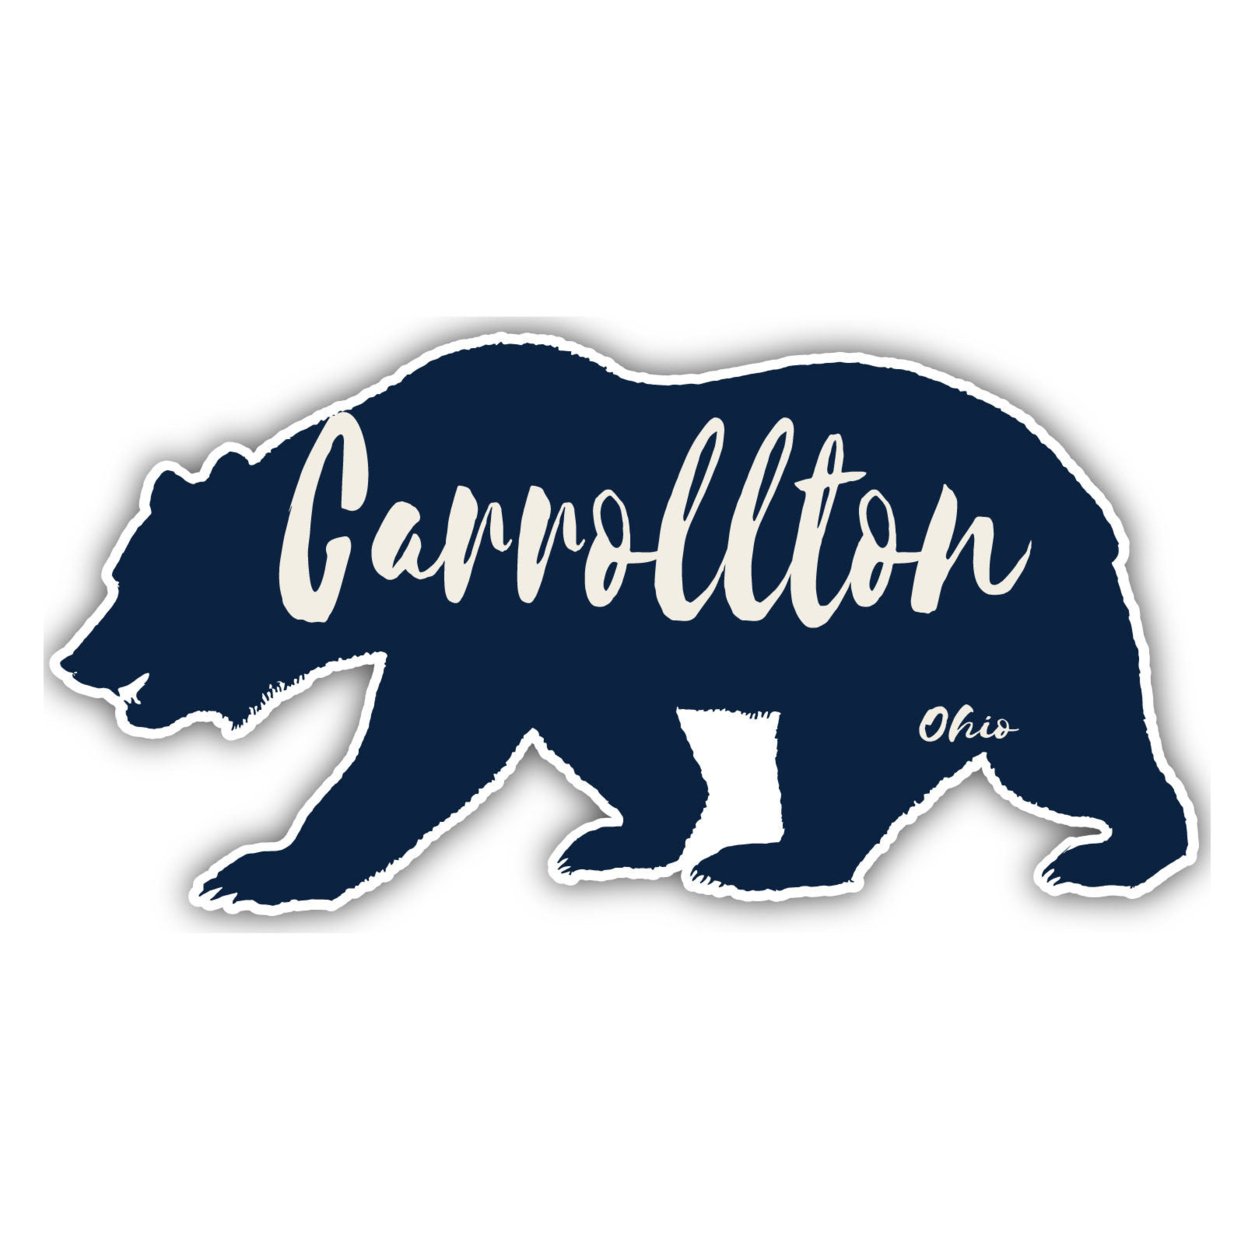 Carrollton Ohio Souvenir Decorative Stickers (Choose Theme And Size) - 4-Pack, 4-Inch, Bear